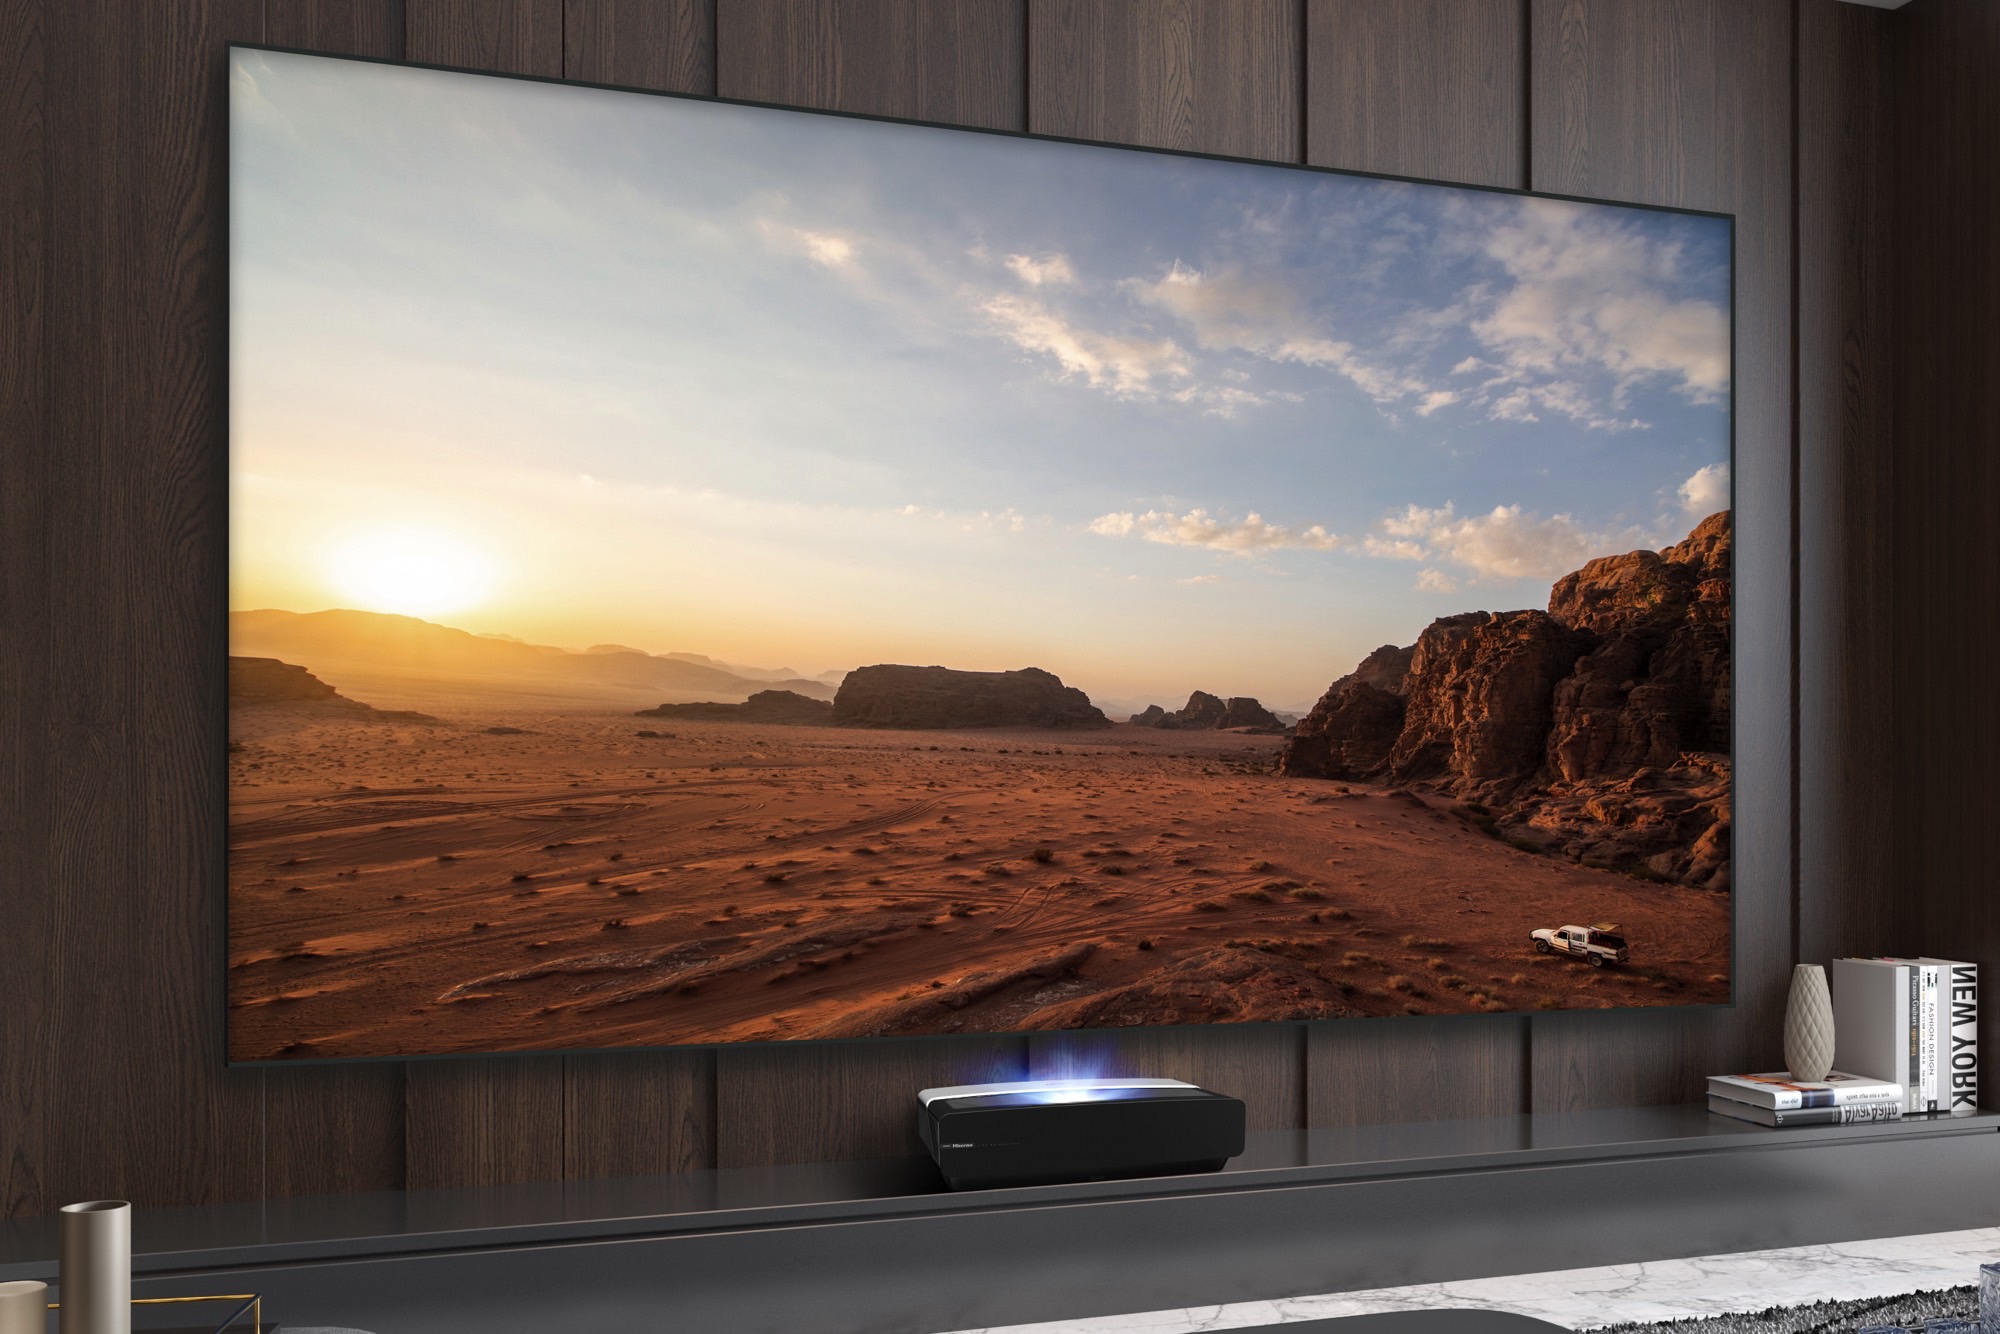 Hisense teases 110-inch, 10,000-nit 4K TV ahead of CES 2024